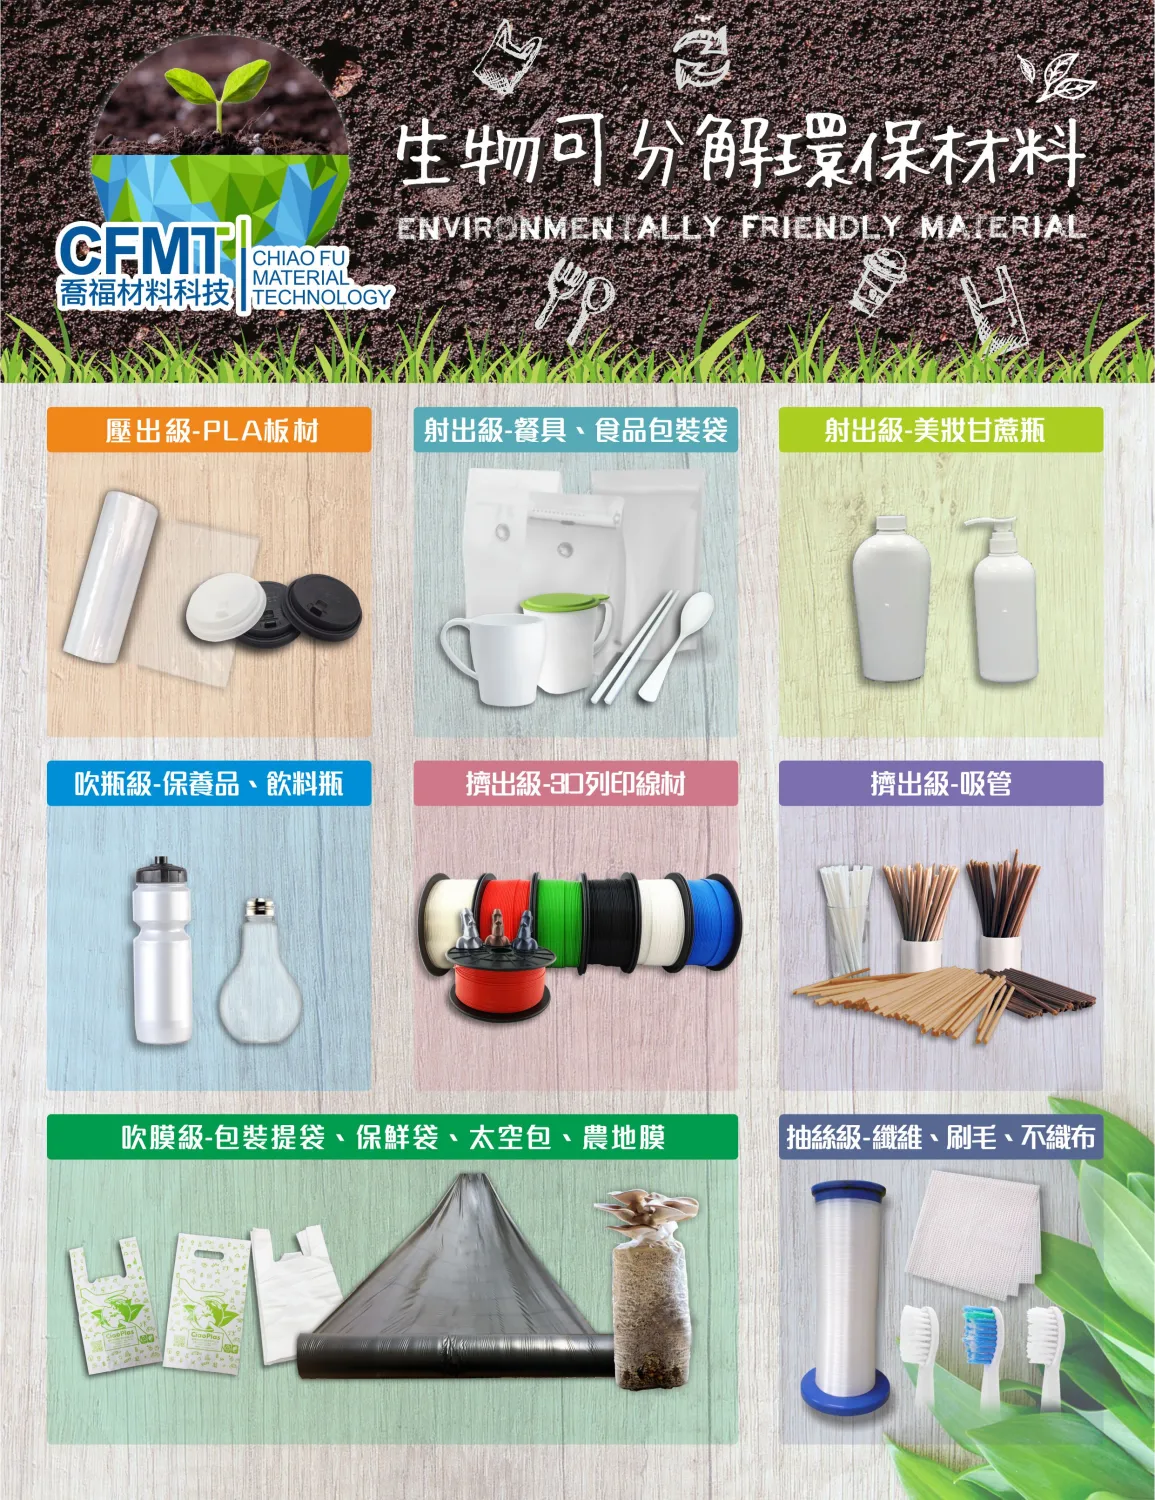 Chiao Fu Material - engineering plastics & Biomass composite materials SliderImage